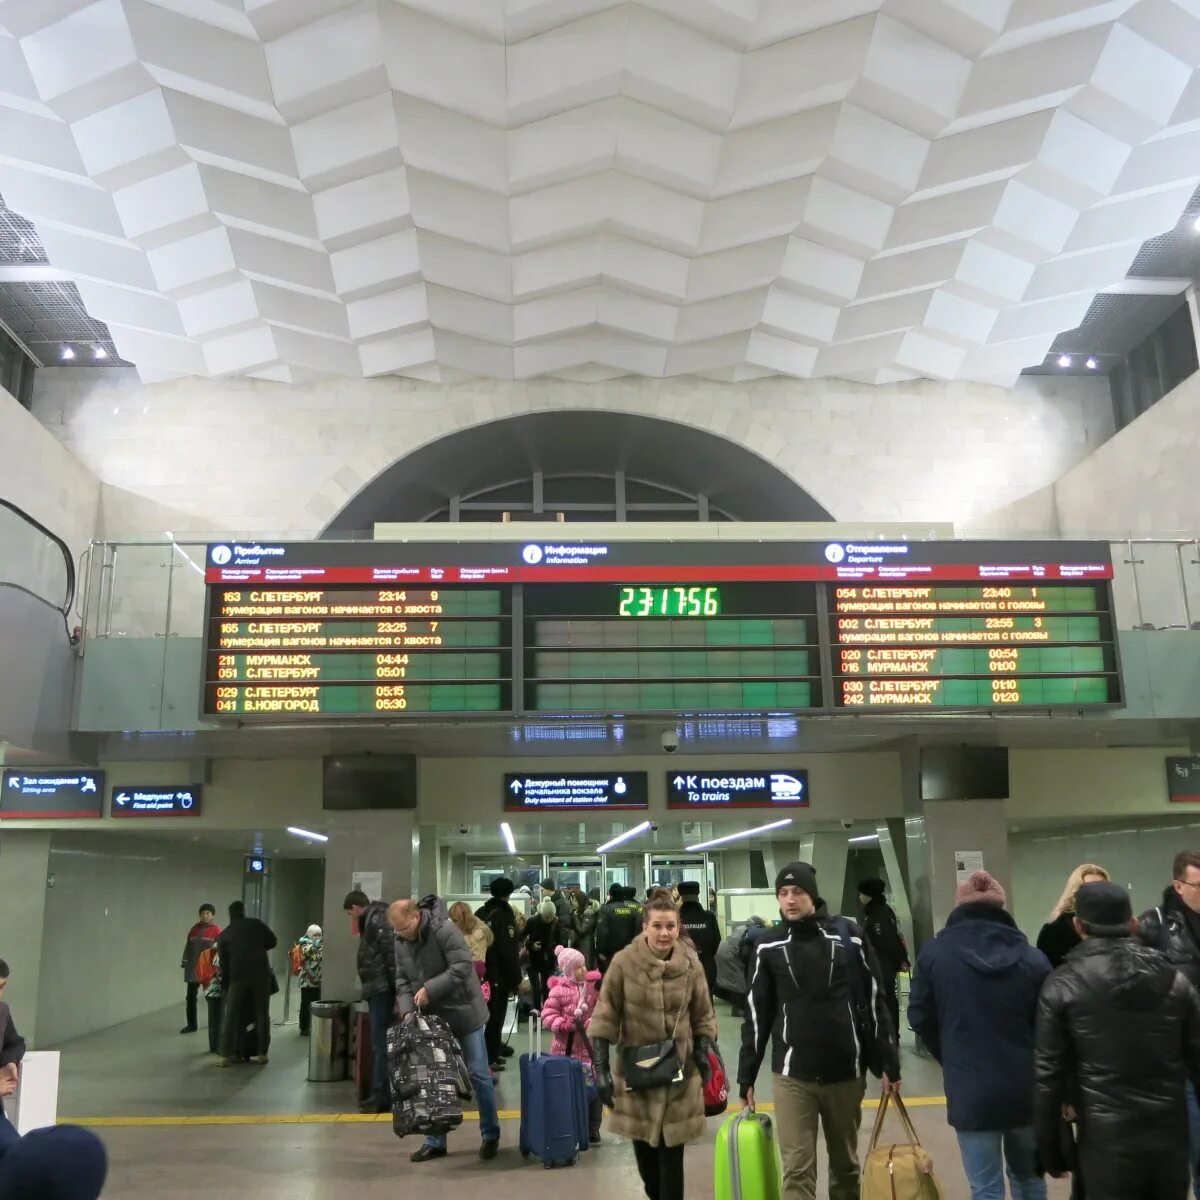 Вокзал внутри. Московский вокзал СПБ внутри. Станция вокзала внутри. Казань Центральный вокзал внутри.